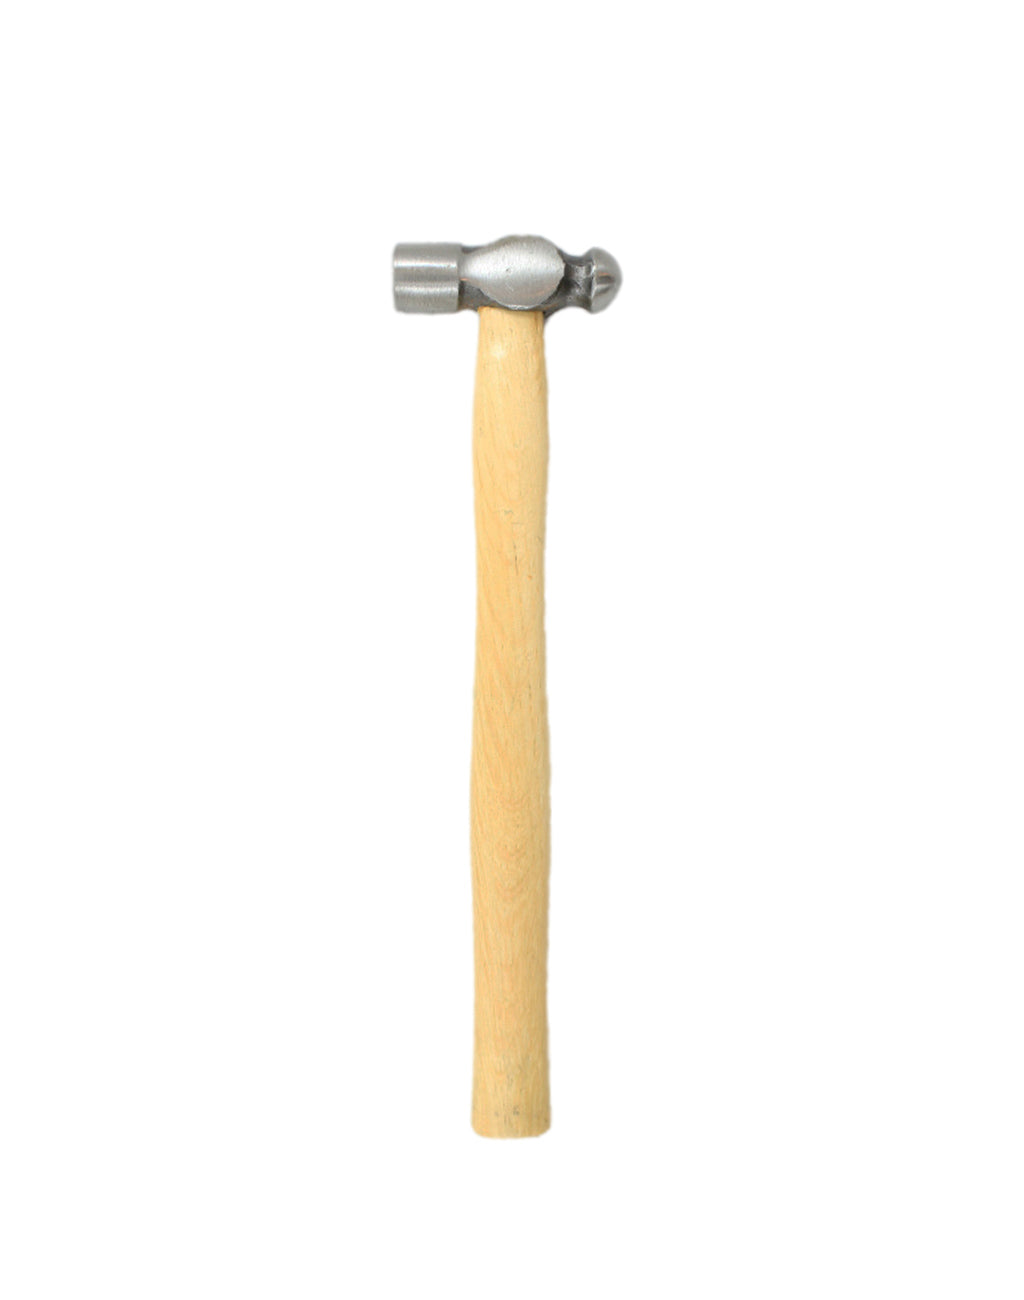 Ball Pein Hammer, 4oz